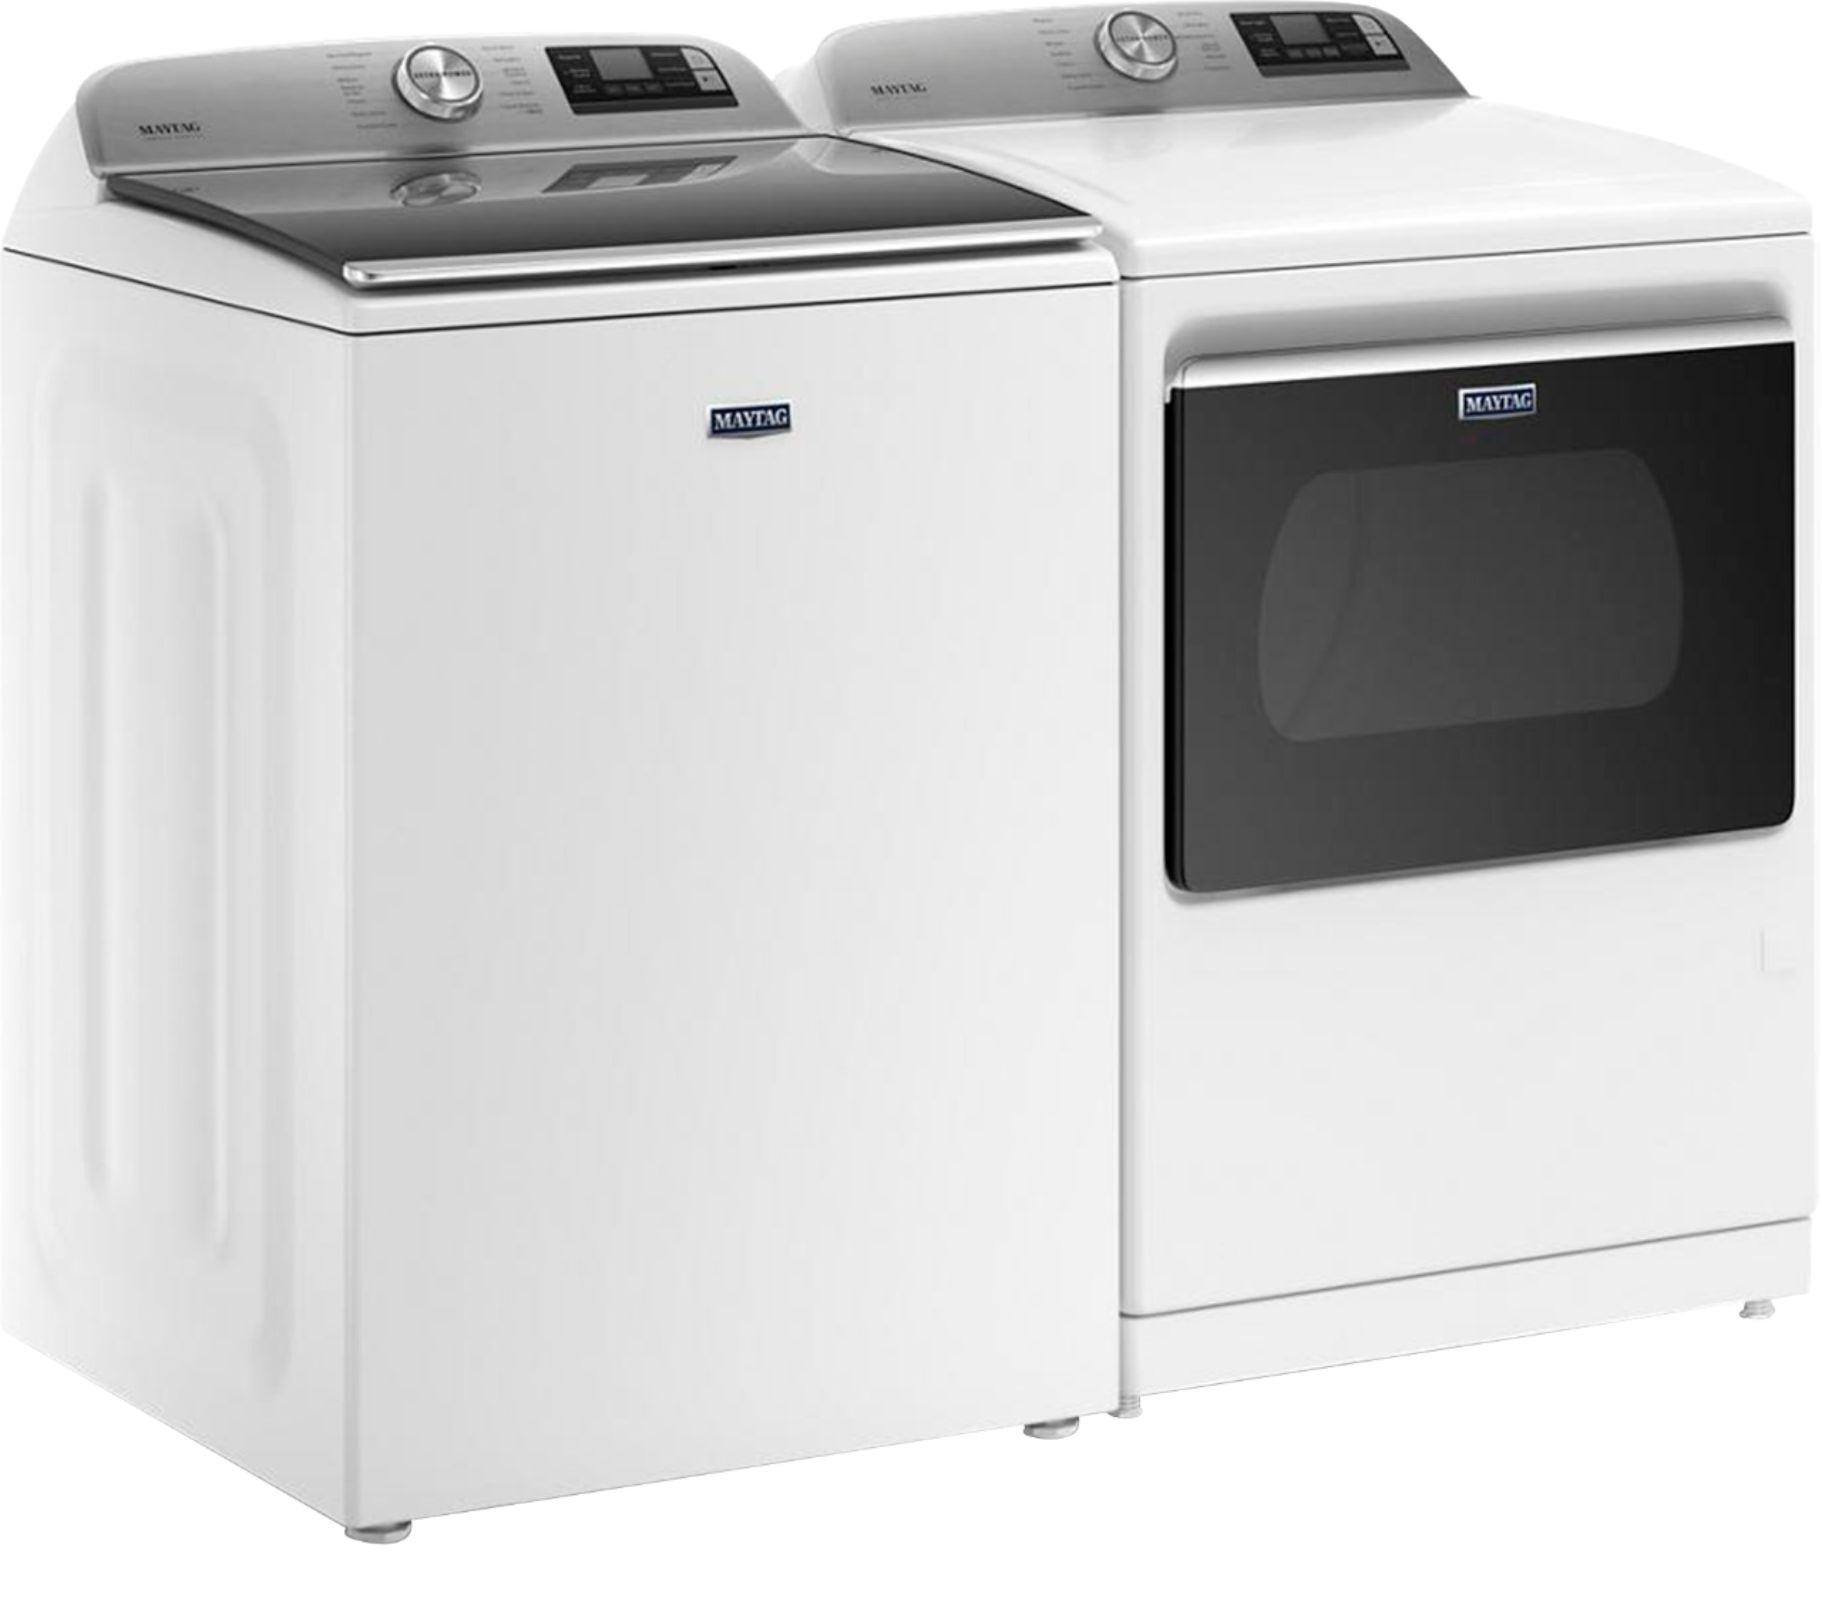 Maytag - 5.2 Cu. Ft. High Efficiency Smart Top Load Washer & Maytag - 7.4 Cu. Ft. Smart Gas Dryer